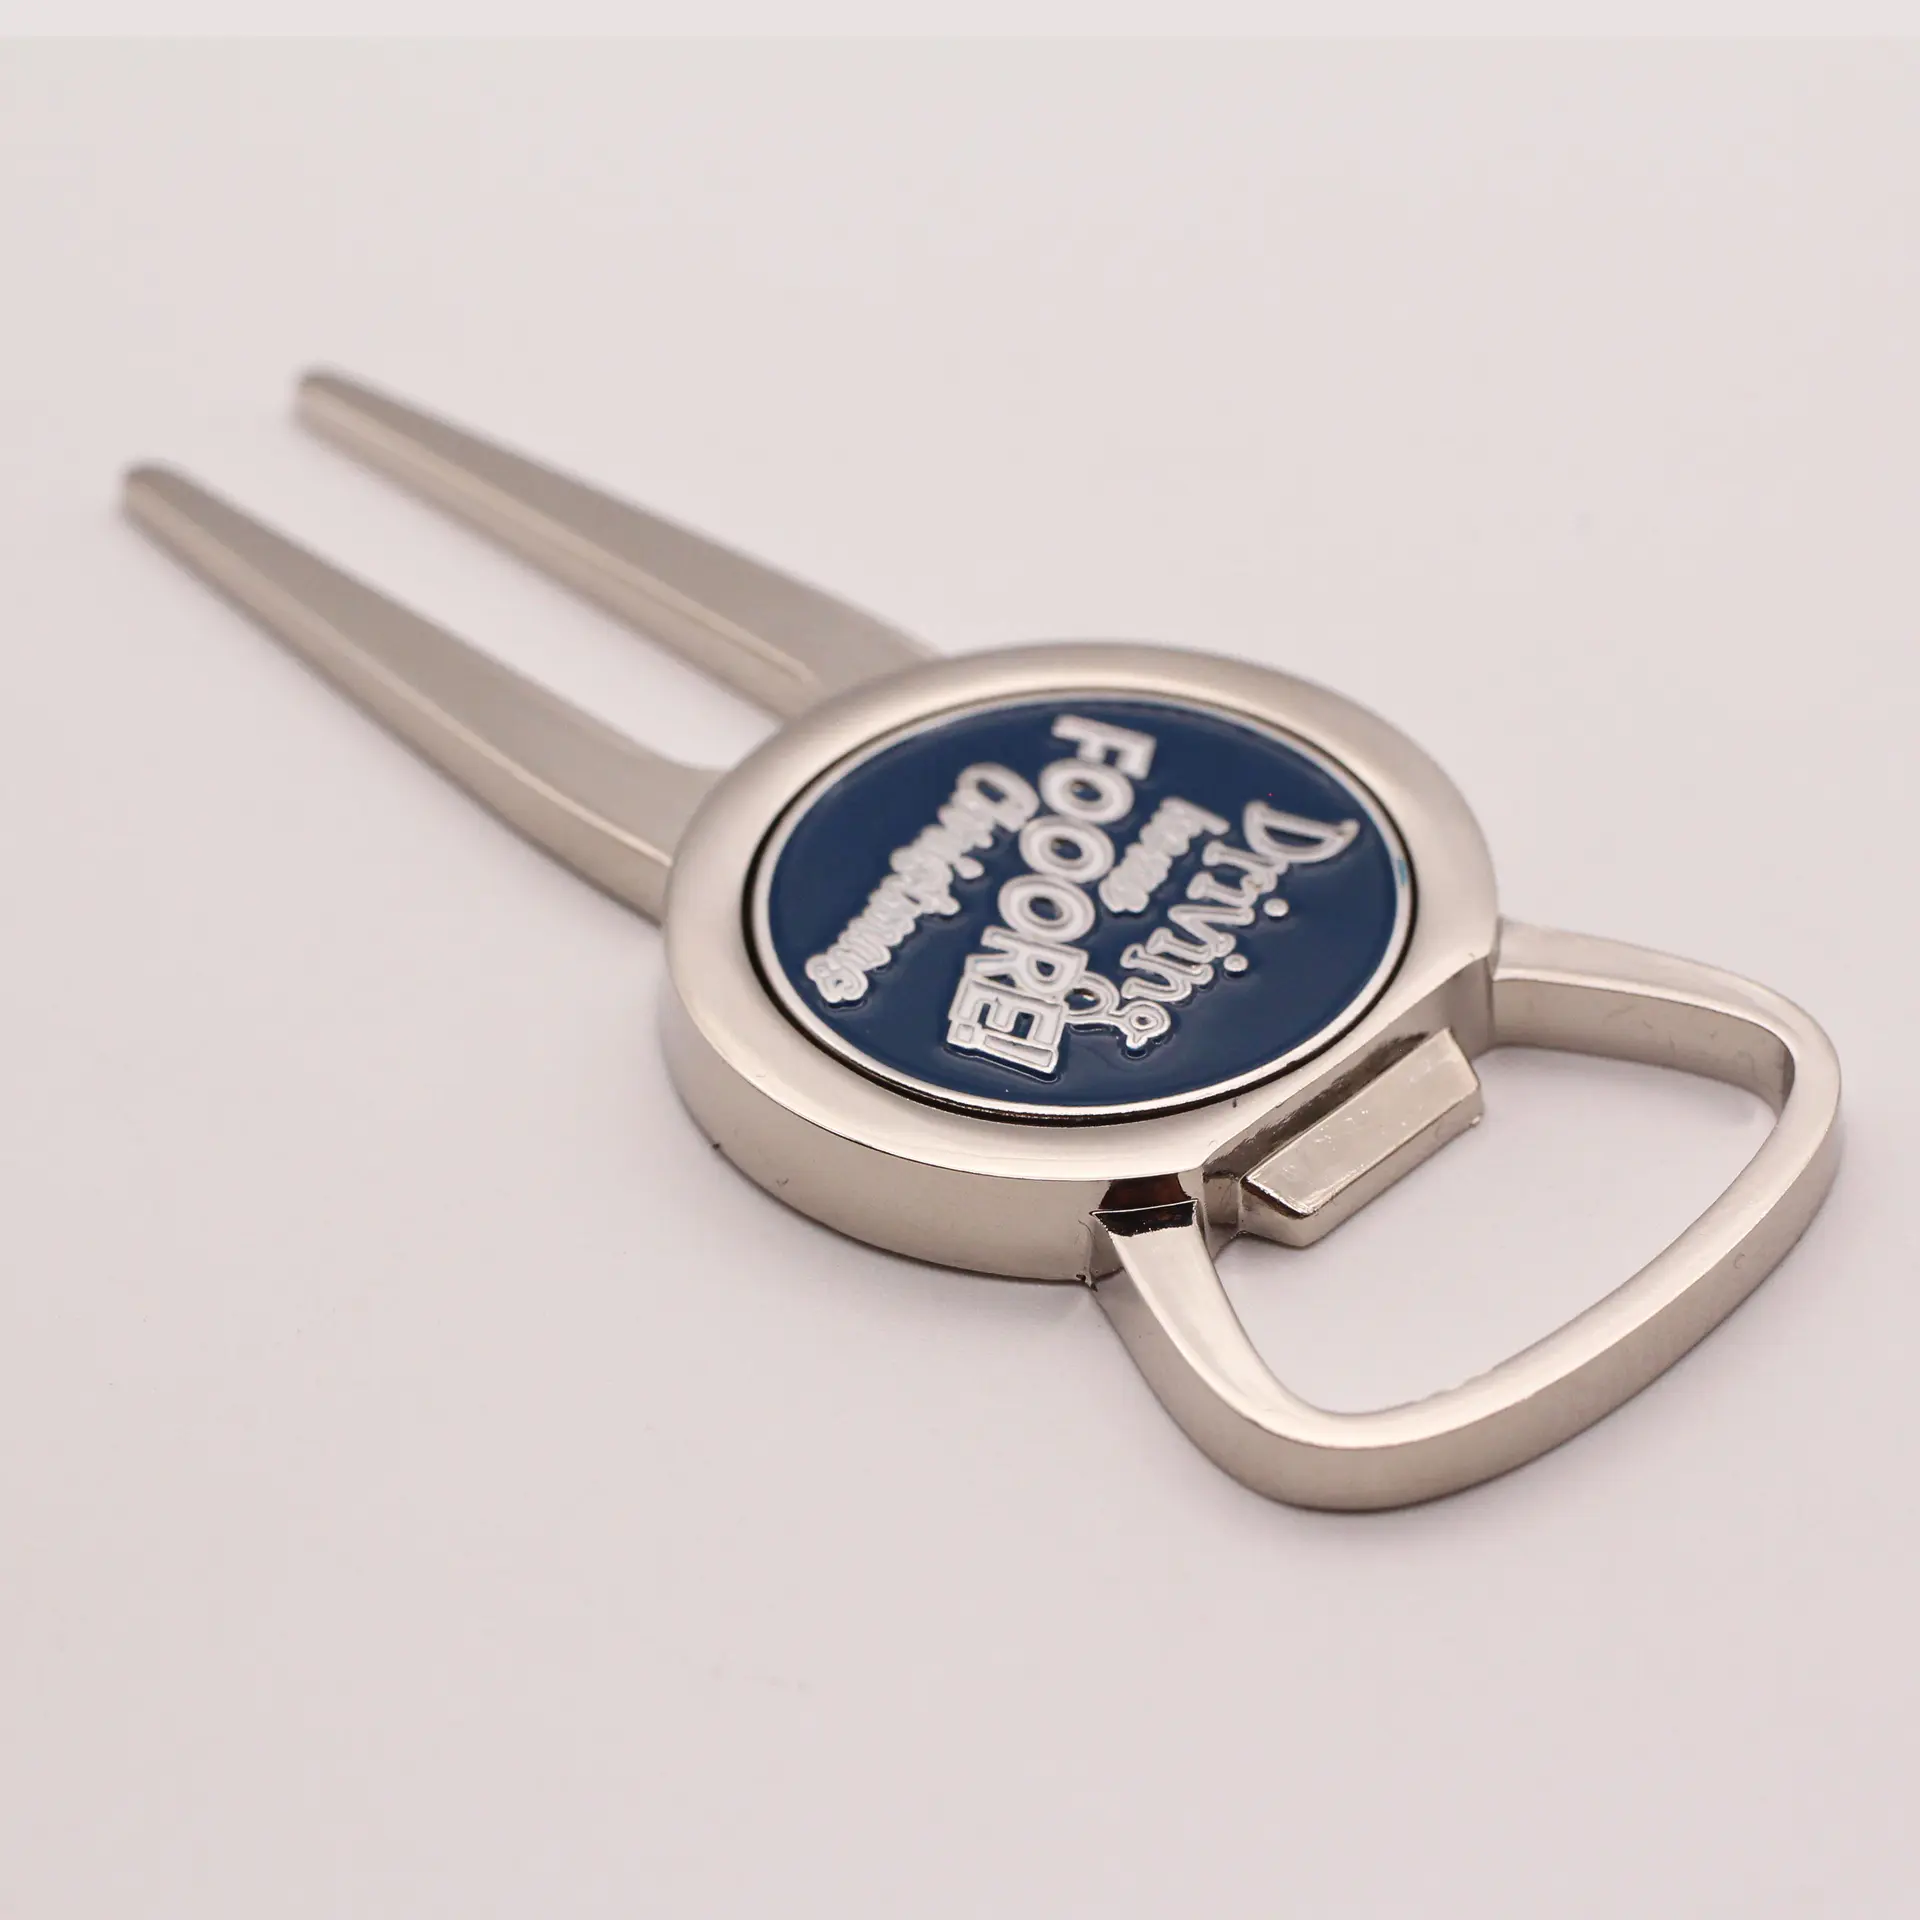 High quality golf accessories zinc alloy custom gold metal divot tool with golf ball marker